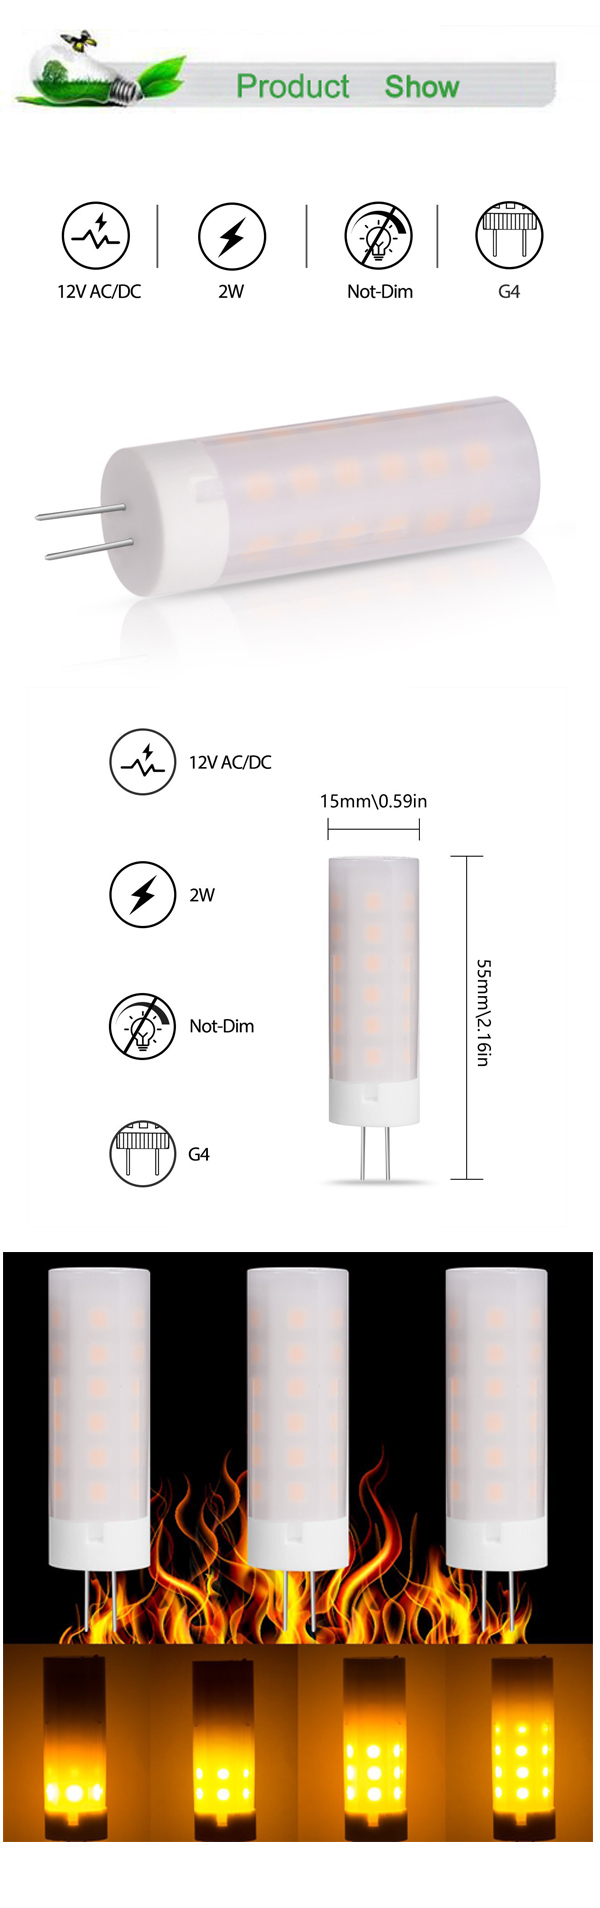 Flicking LED Flame Bulb Emulational Fair Flashing 1700K 2W G4 LED Light Bulb